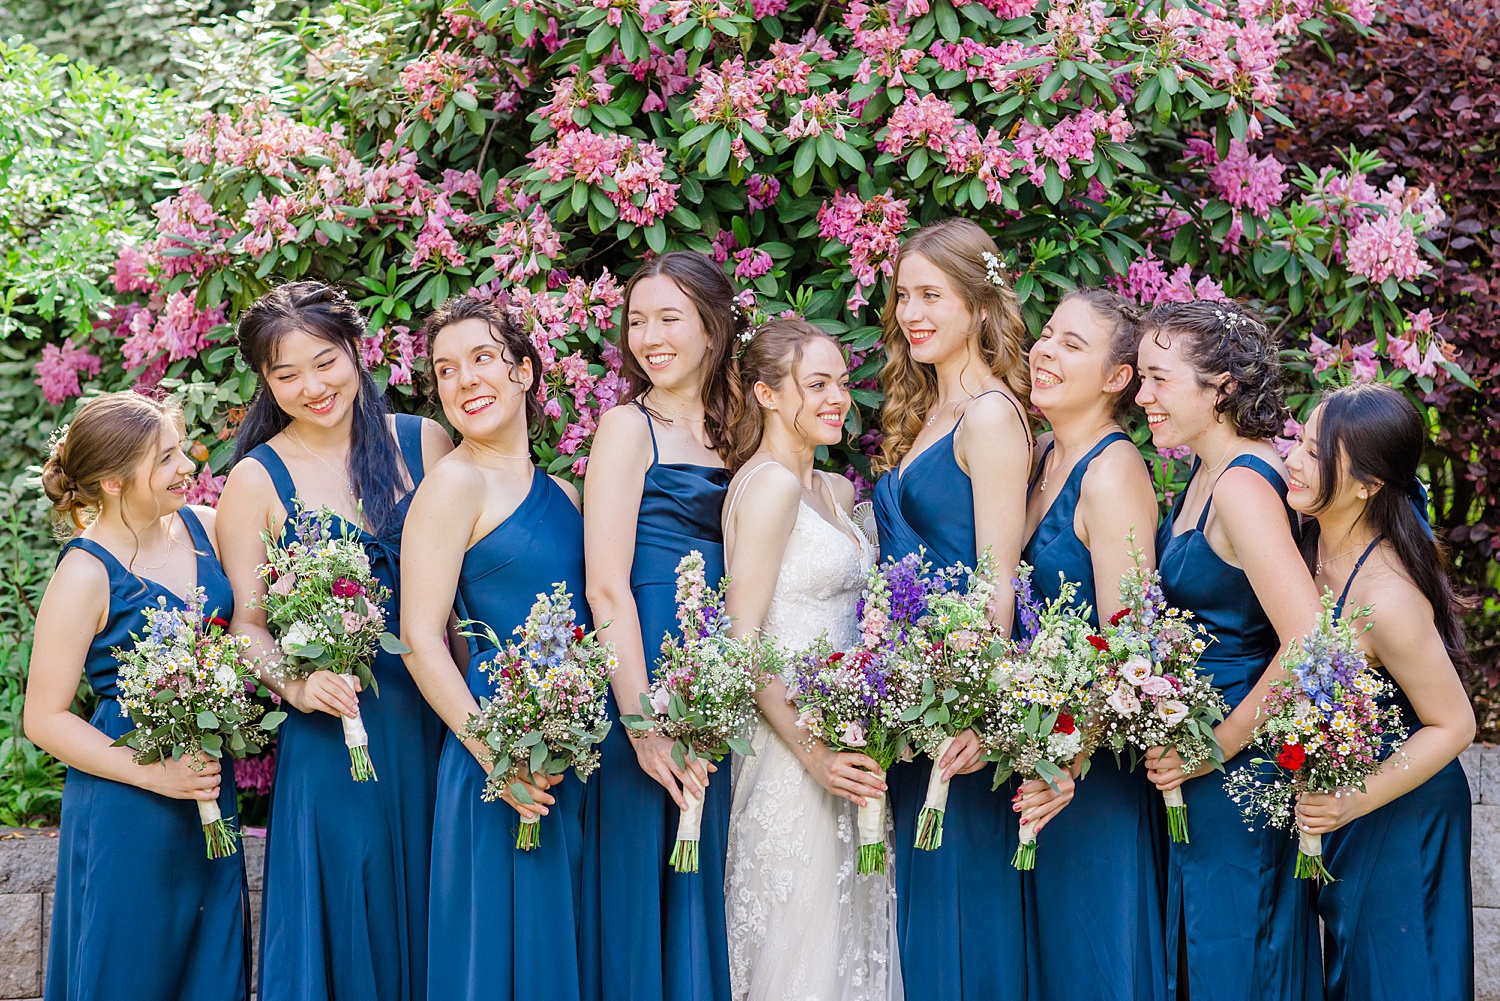 bride with bridesmaids in dark blue satin dresses holding garden inspired wedding flowers